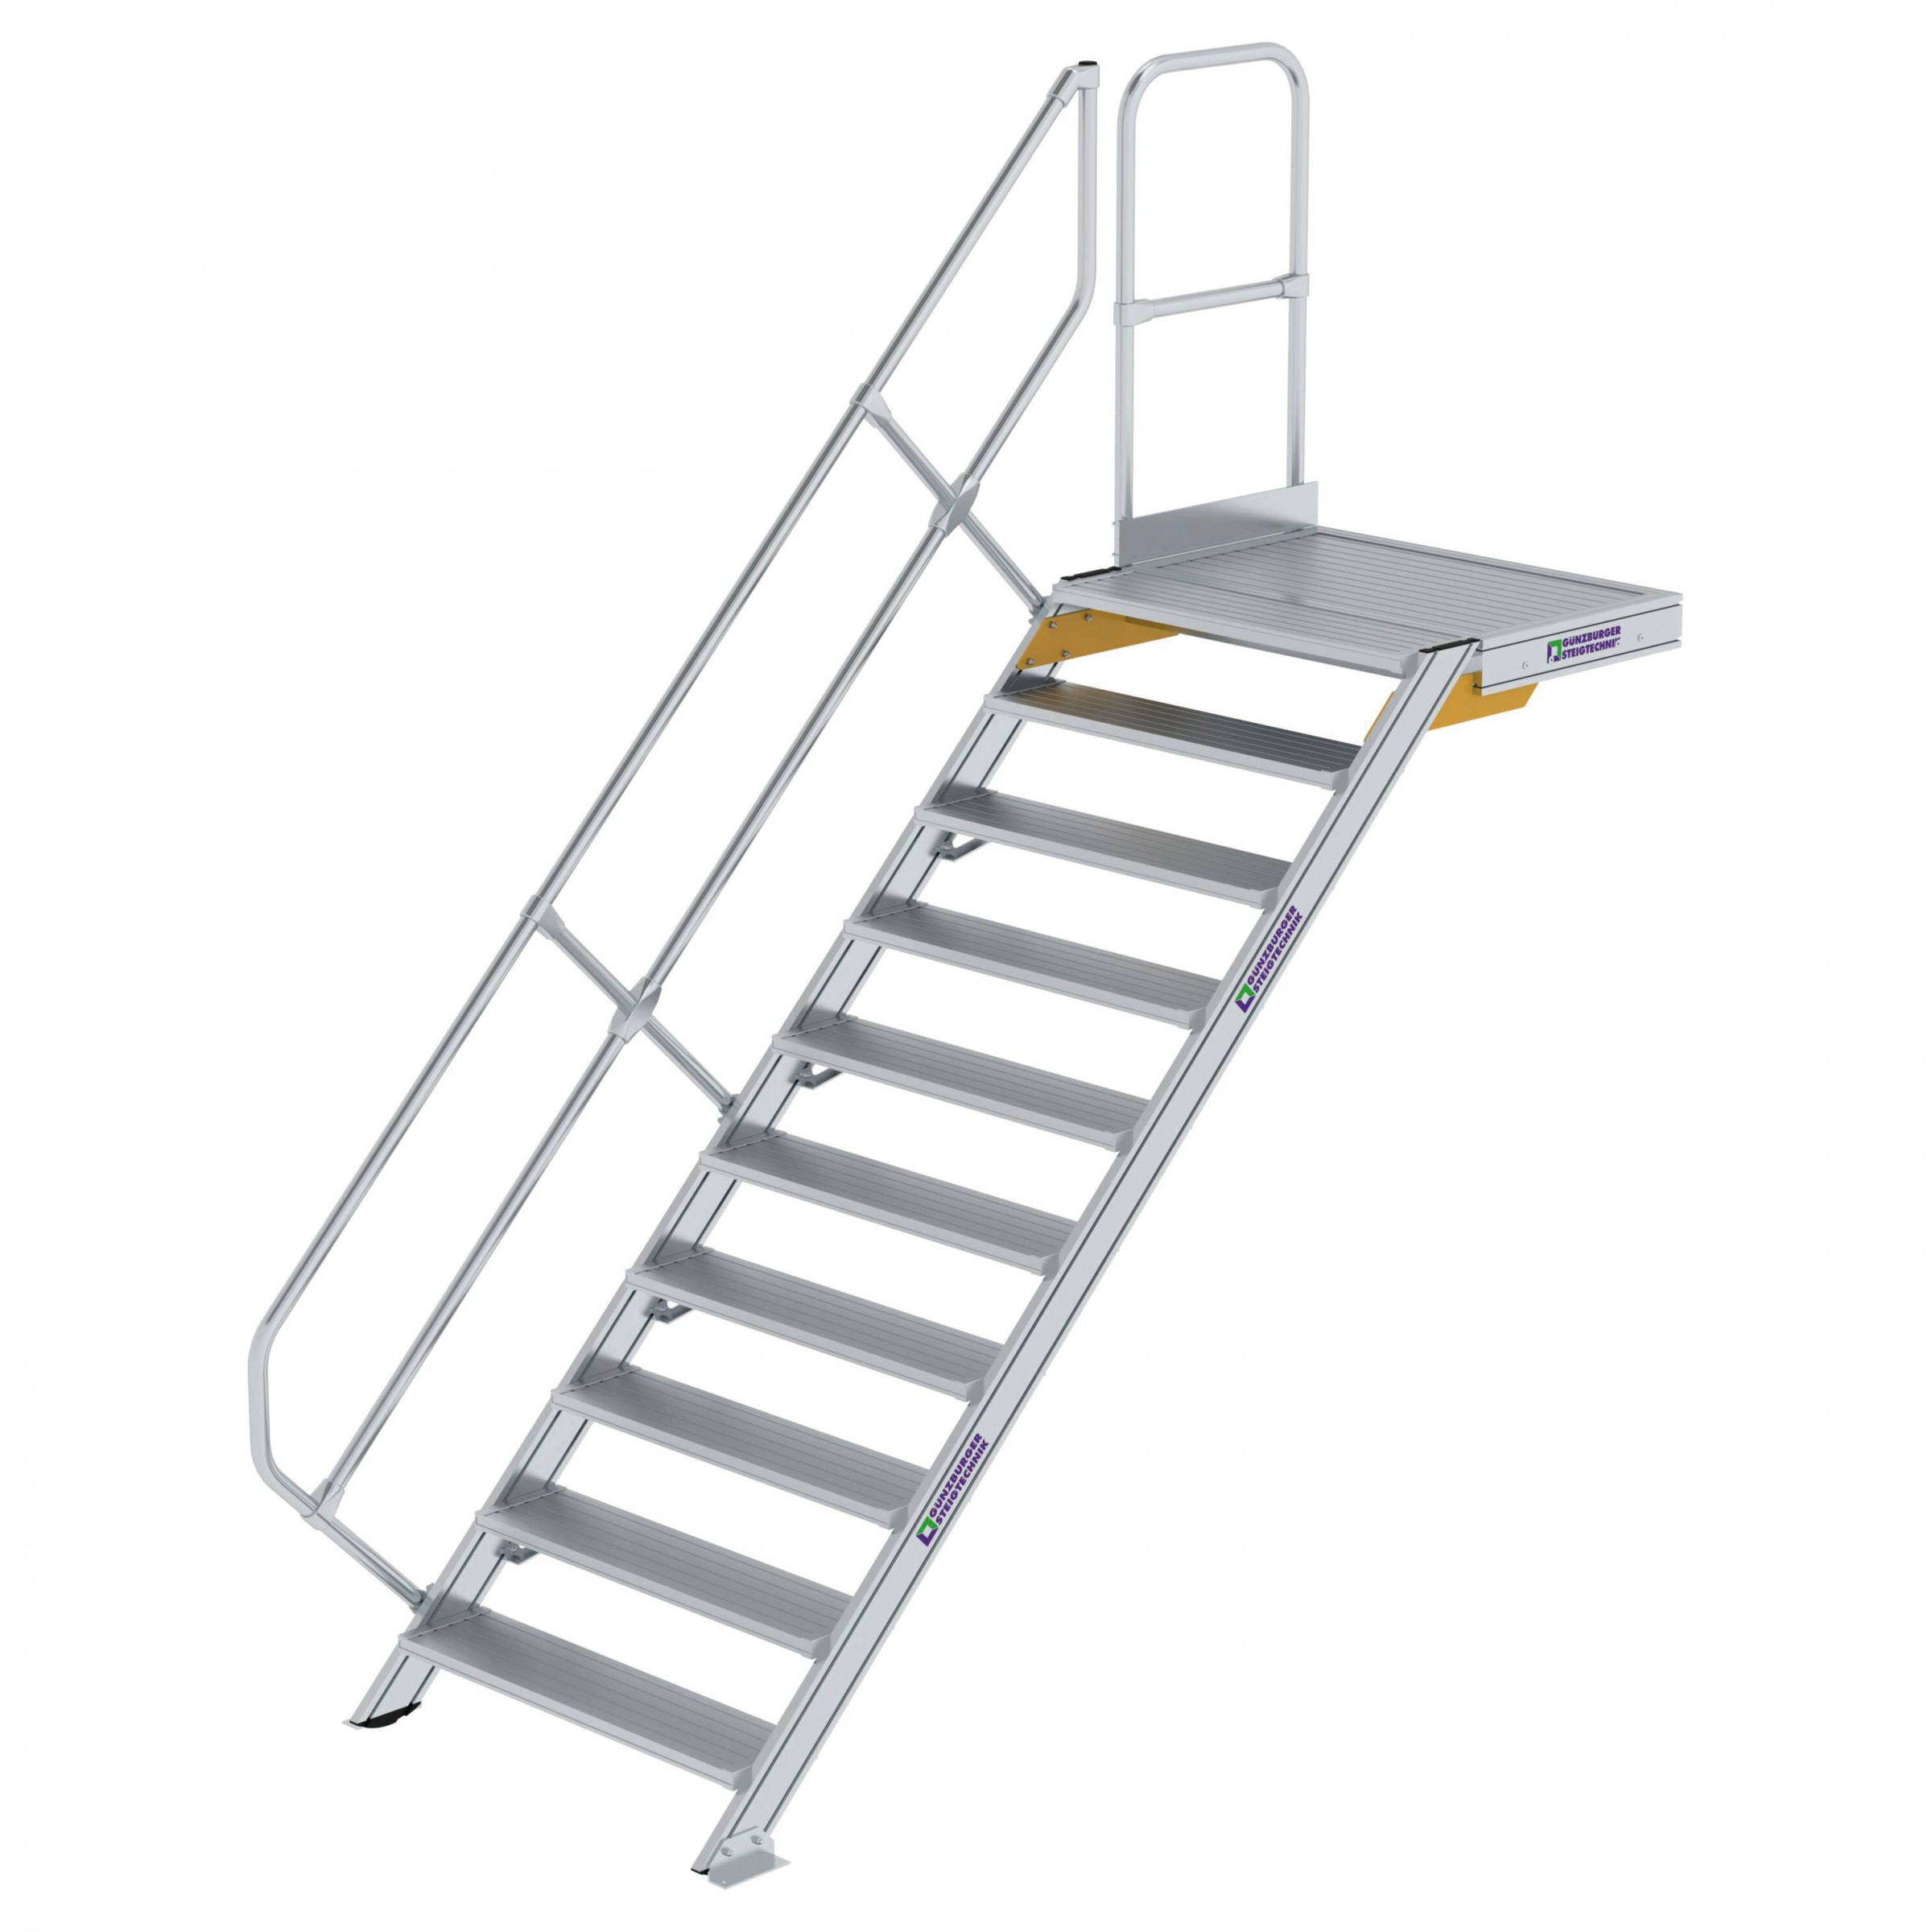 Aluminium-Treppe mit Plattform, 45°, Stufenbreite 1000 mm, 5 Stufen